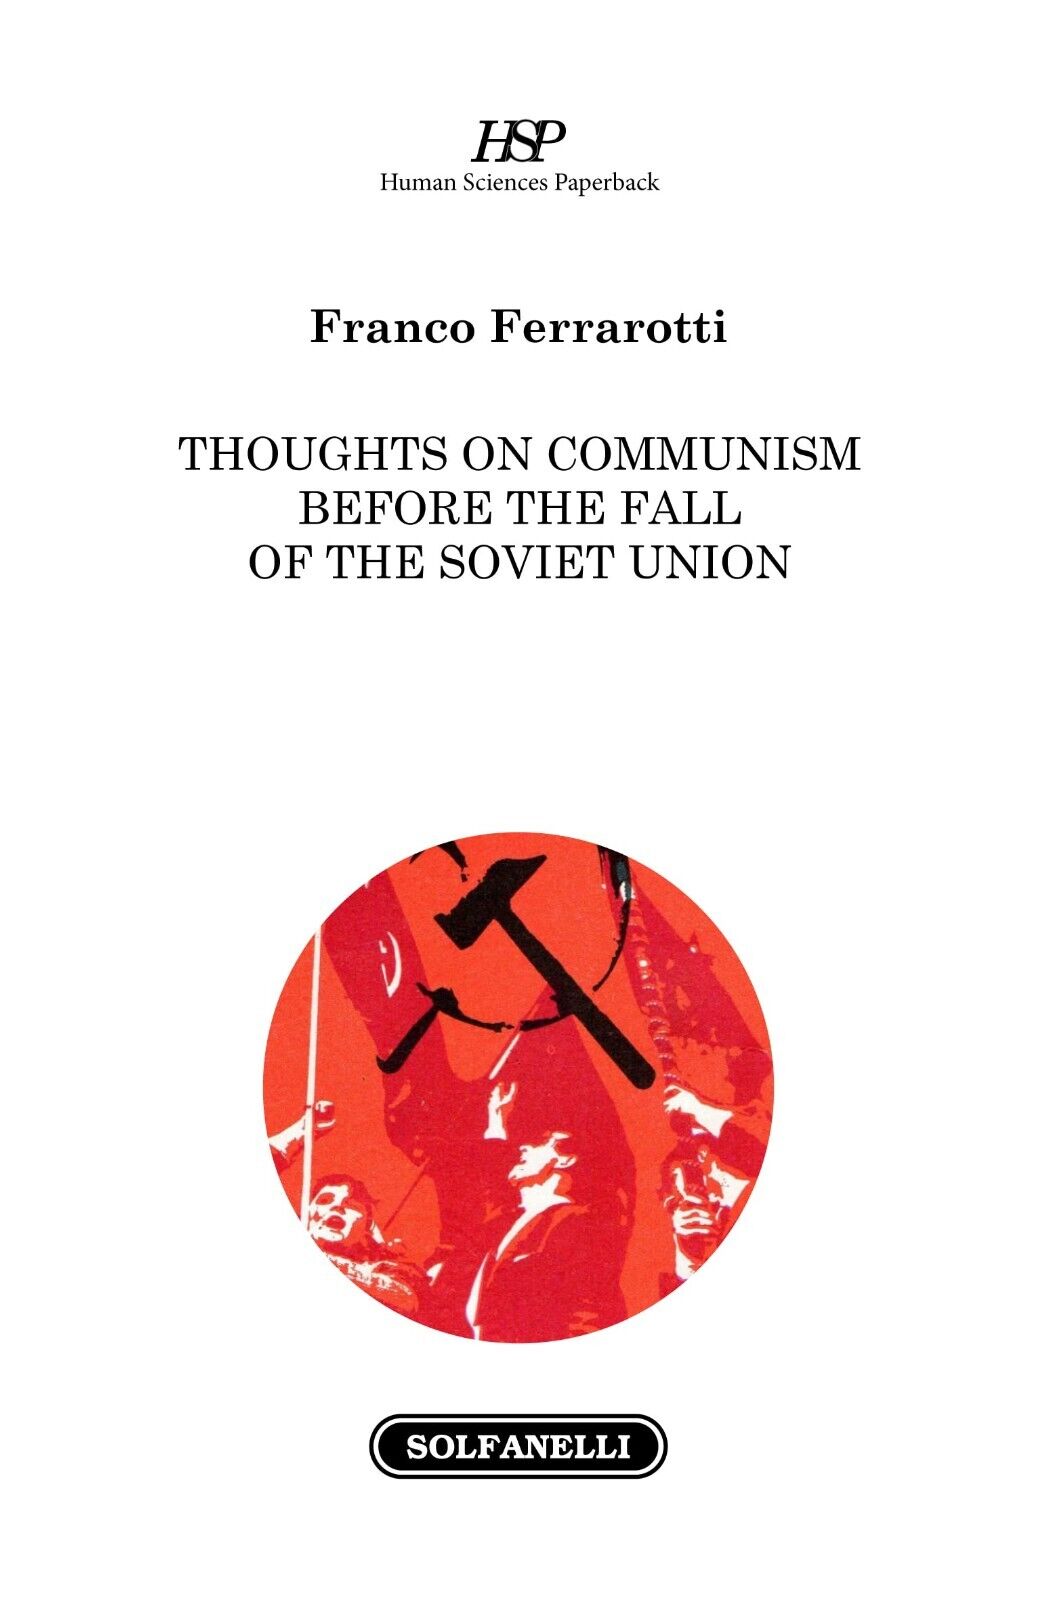 Thoughts on Communism Before the Fall of the Soviet Union di Franco Ferrarotti, libro usato